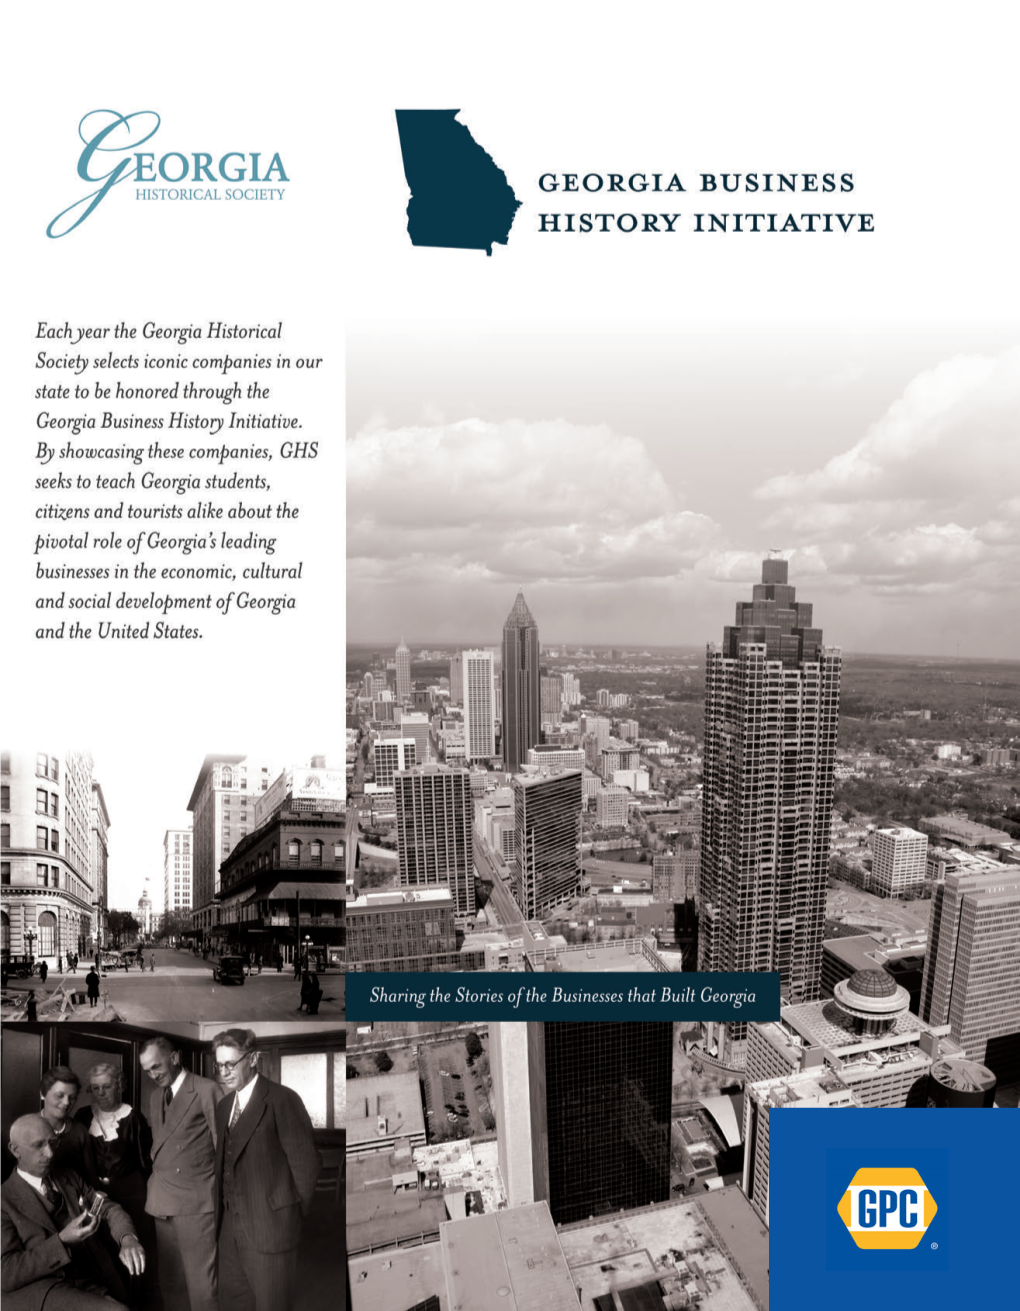 Genuine Parts Company a Profile in Georgia’S Business History